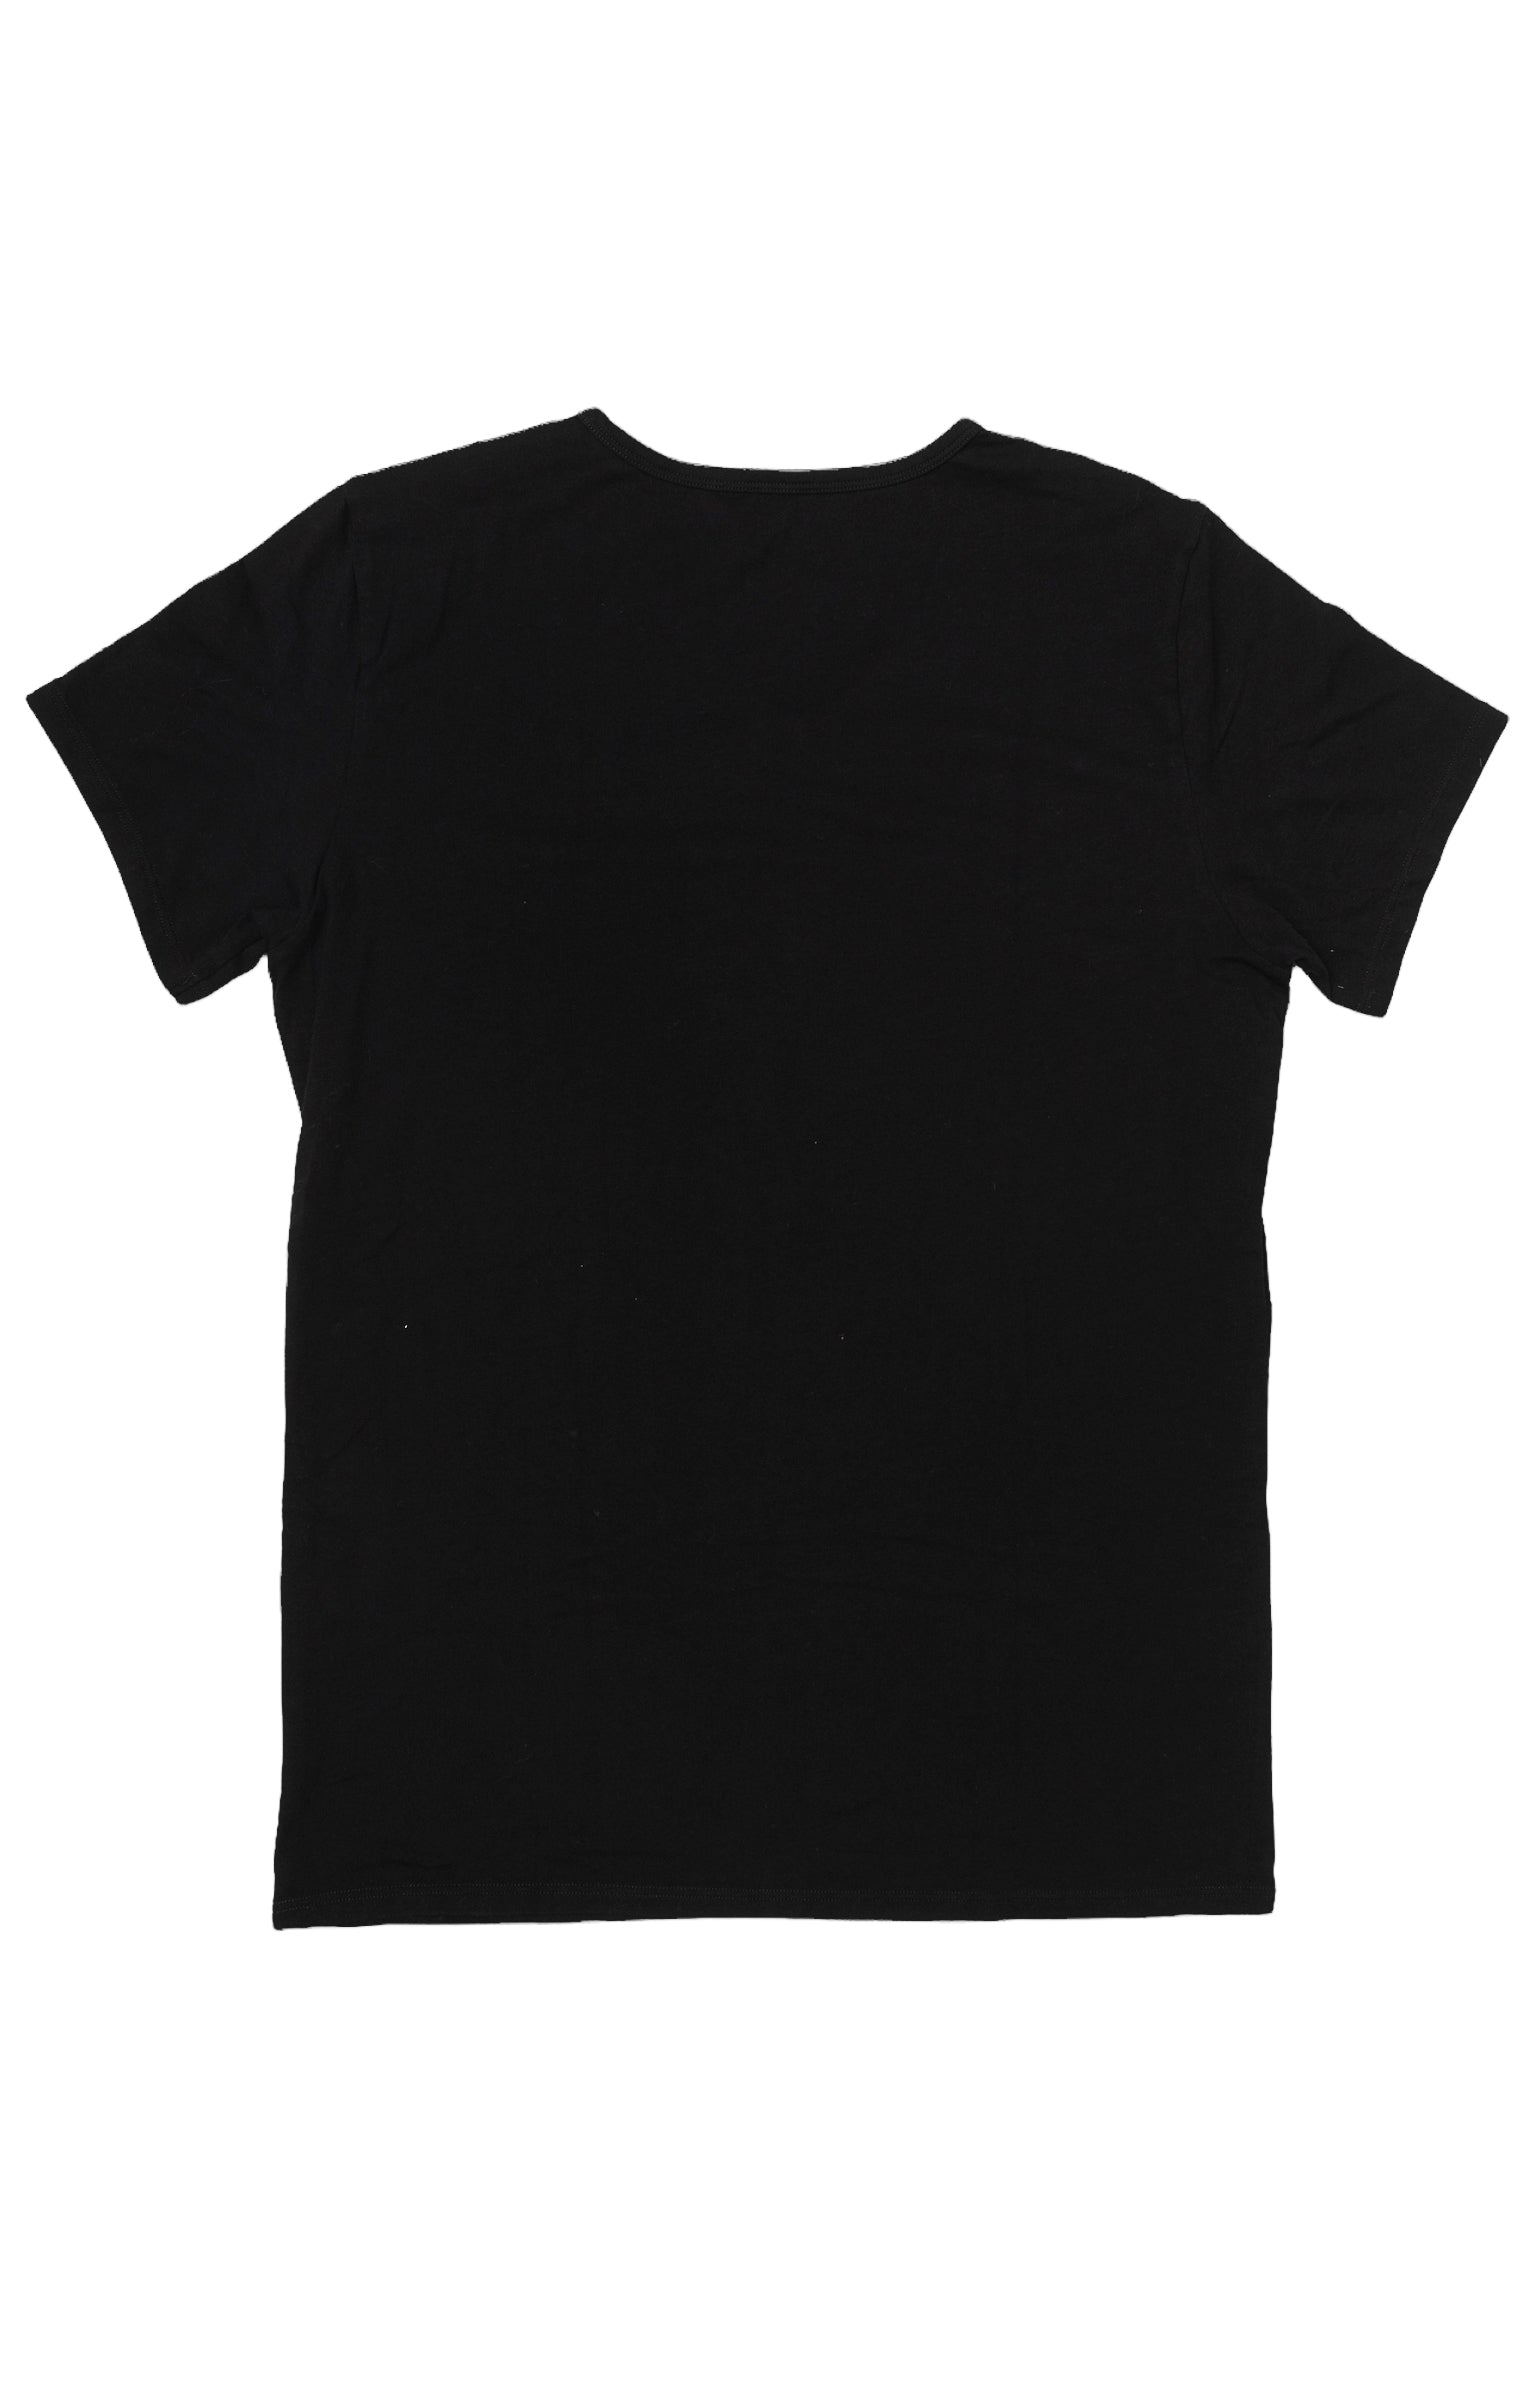 TOMMY HILFIGER T-Shirt Size: XL